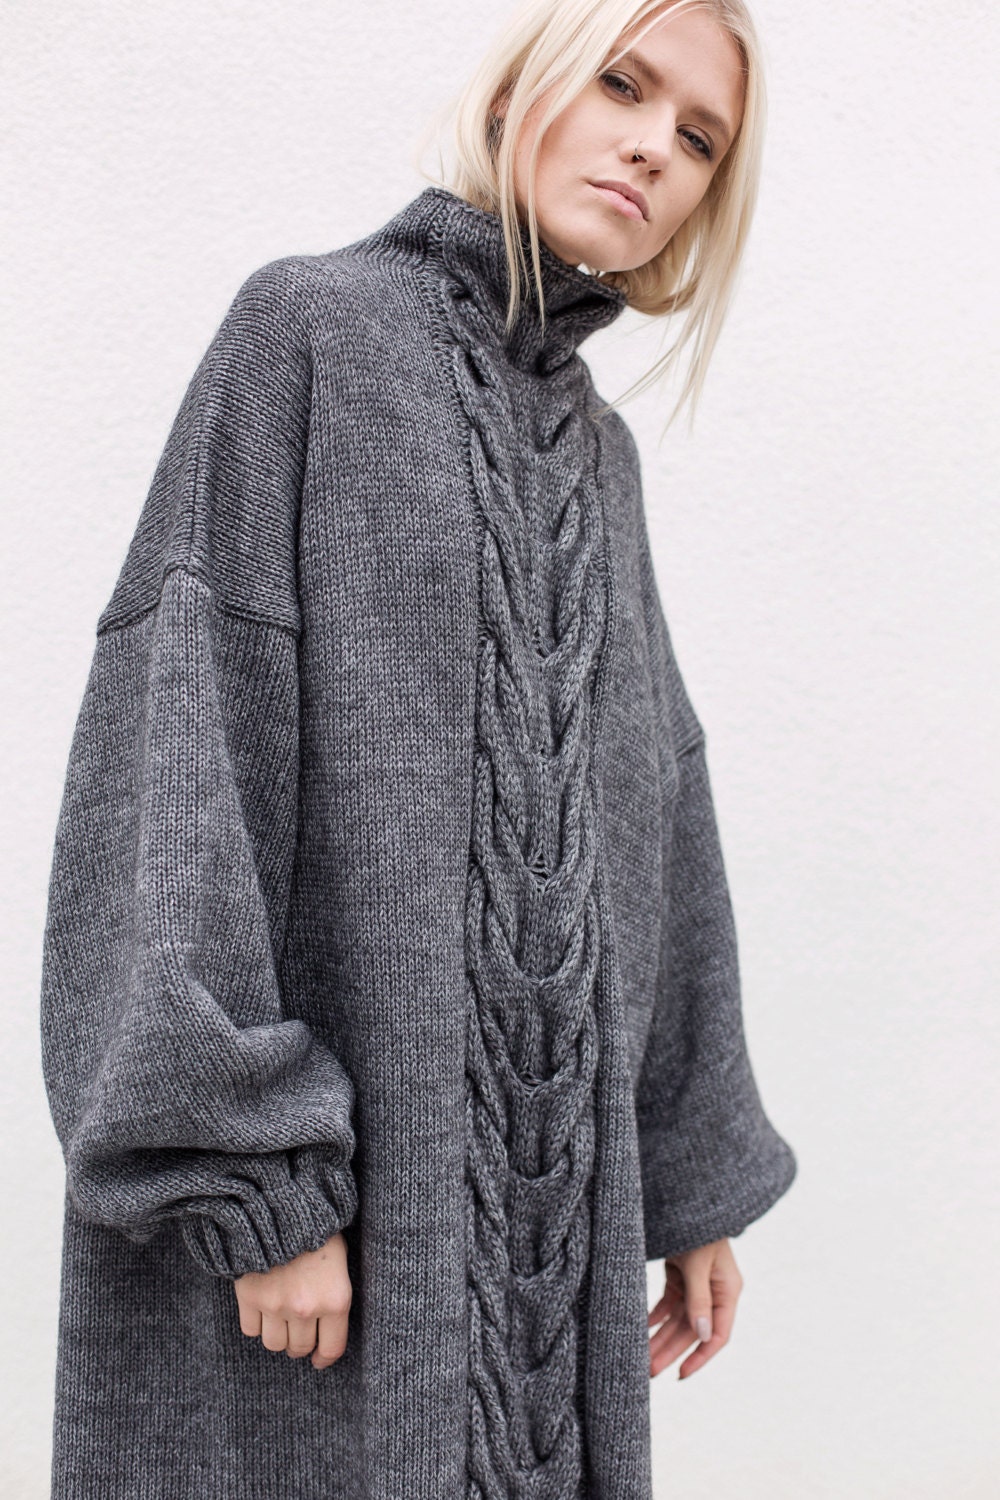 Oversized dresses oversized knitting loose sweater cable | Etsy